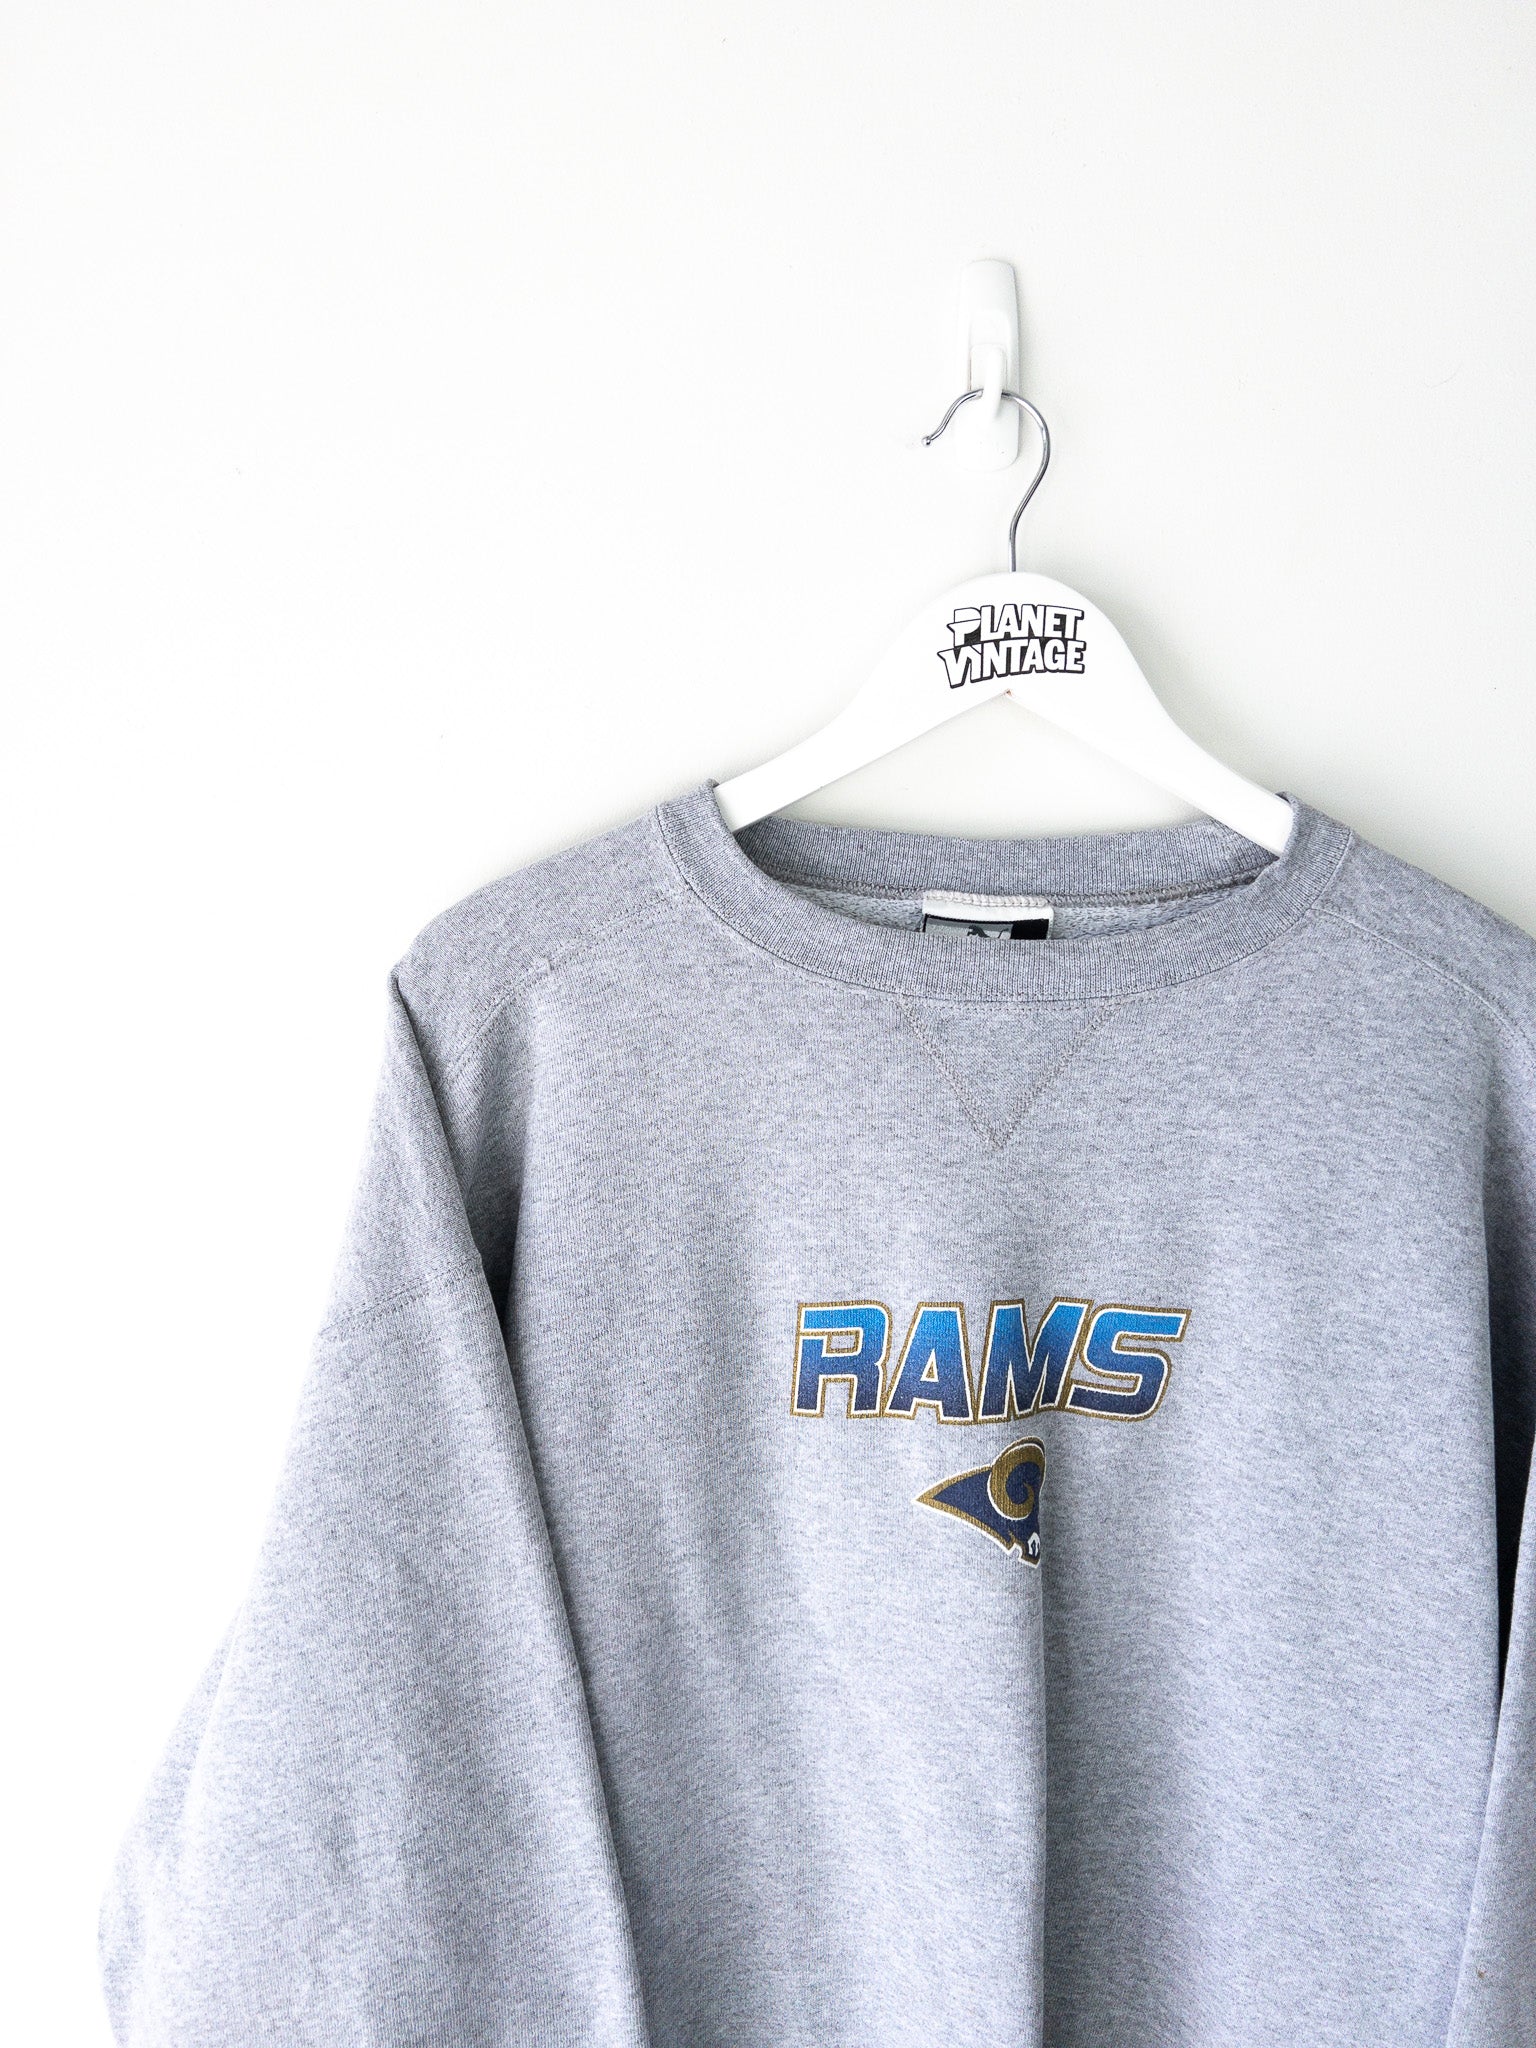 Vintage St. Louis Rams Sweatshirt (XL)